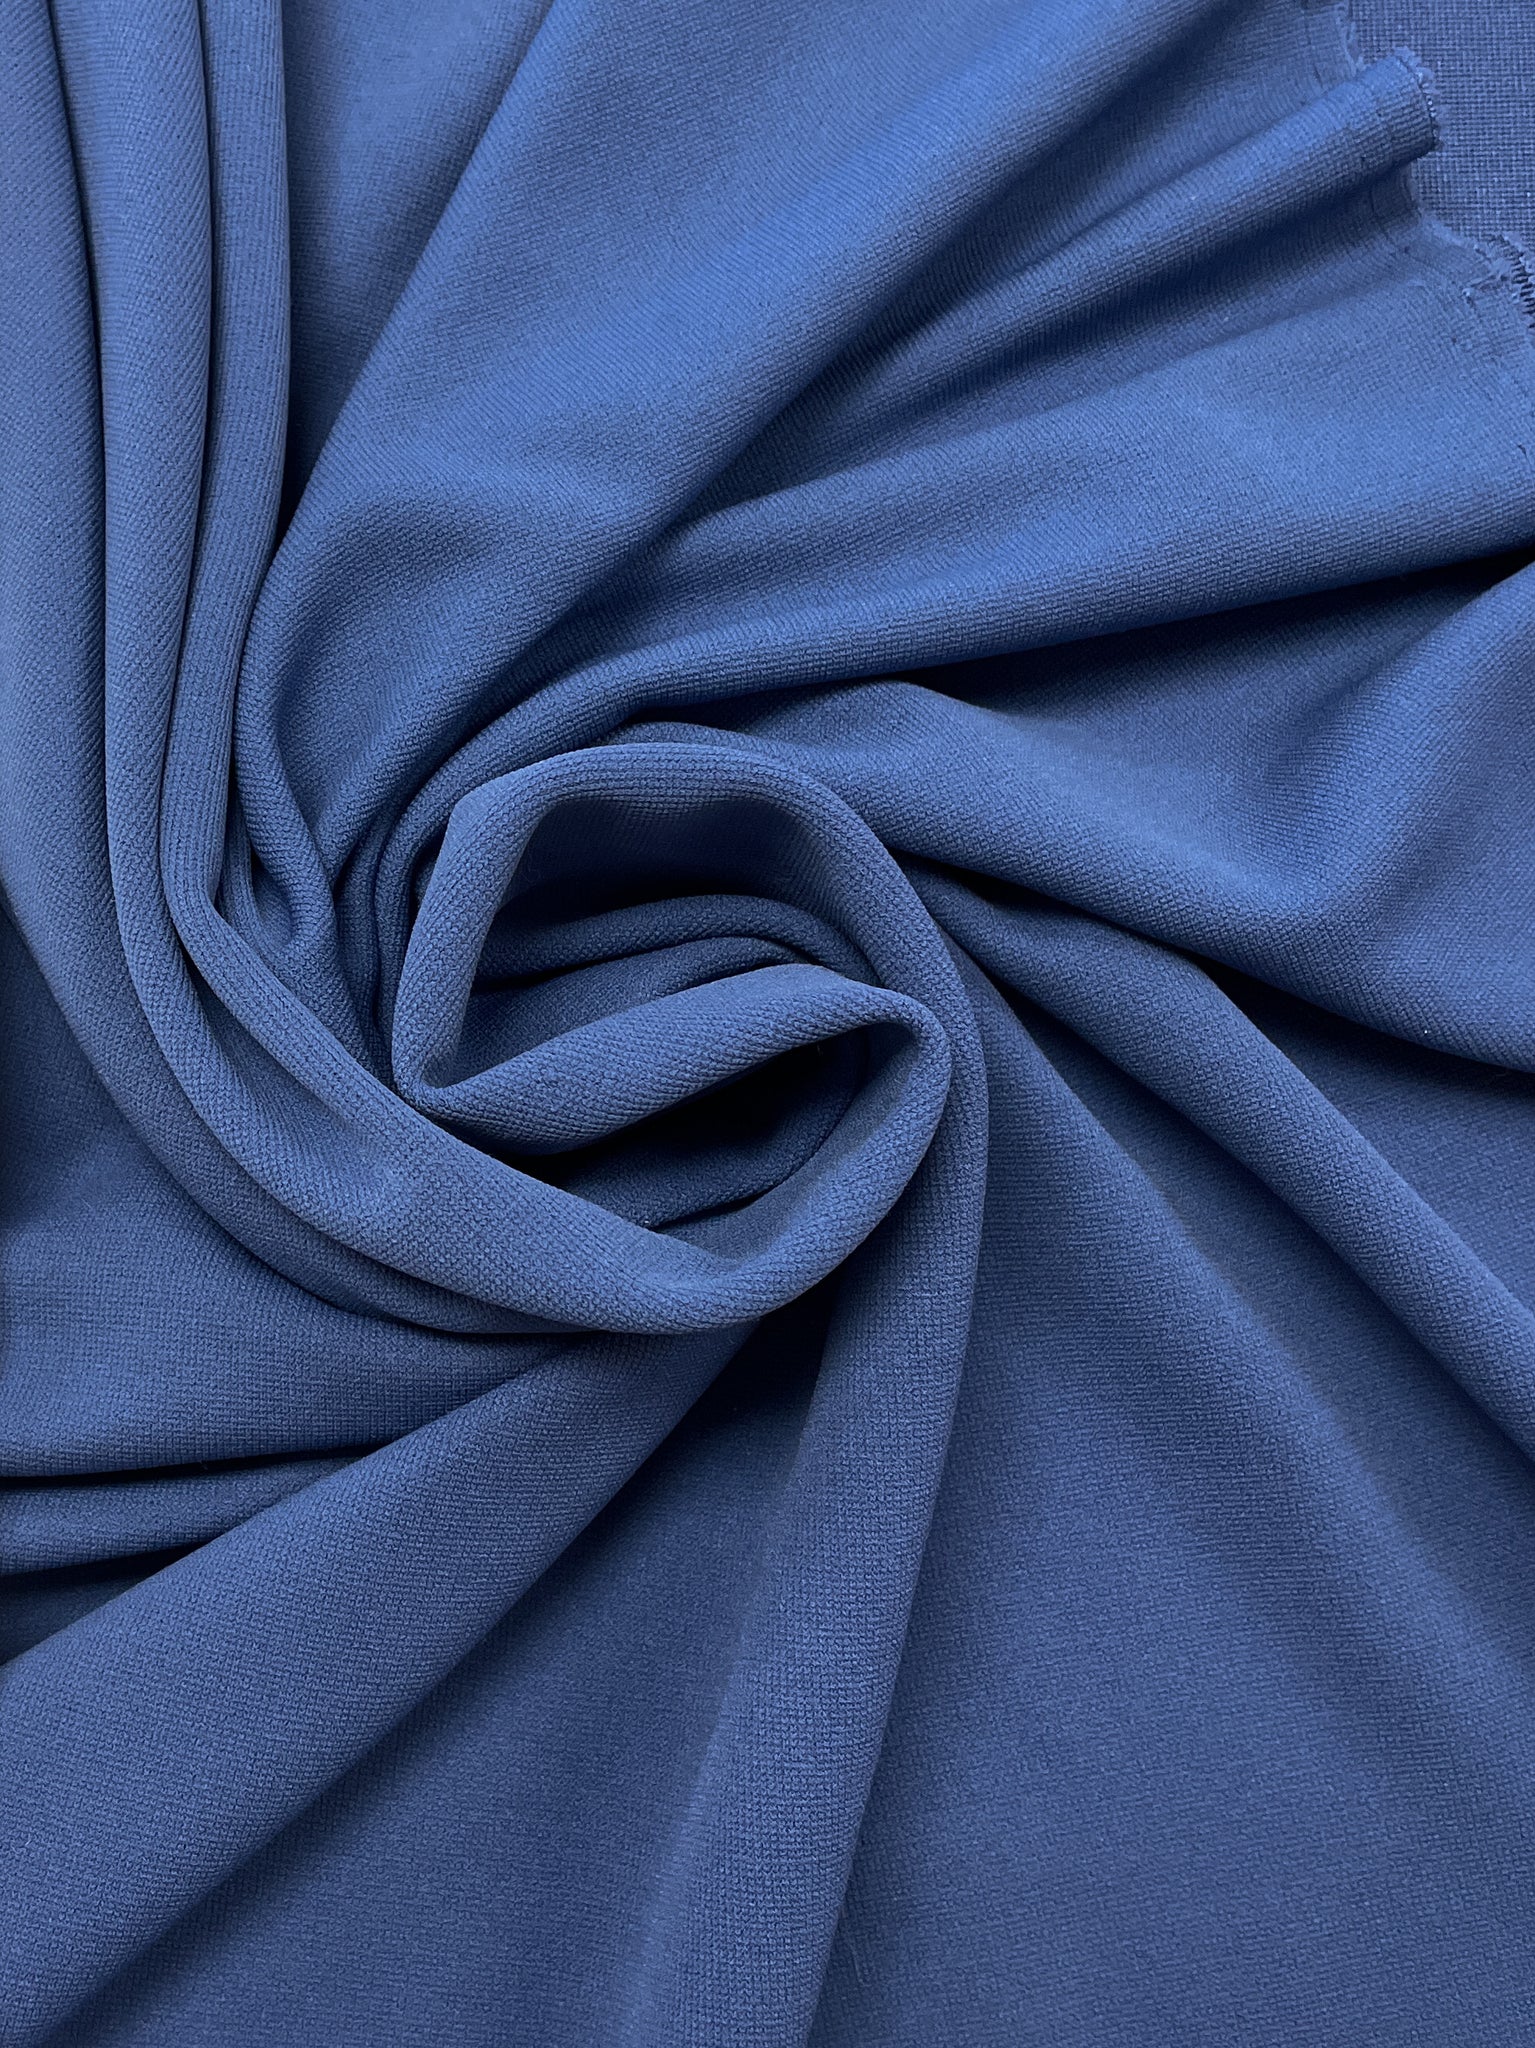 4 YD Polyester Stretch Knit - Blue